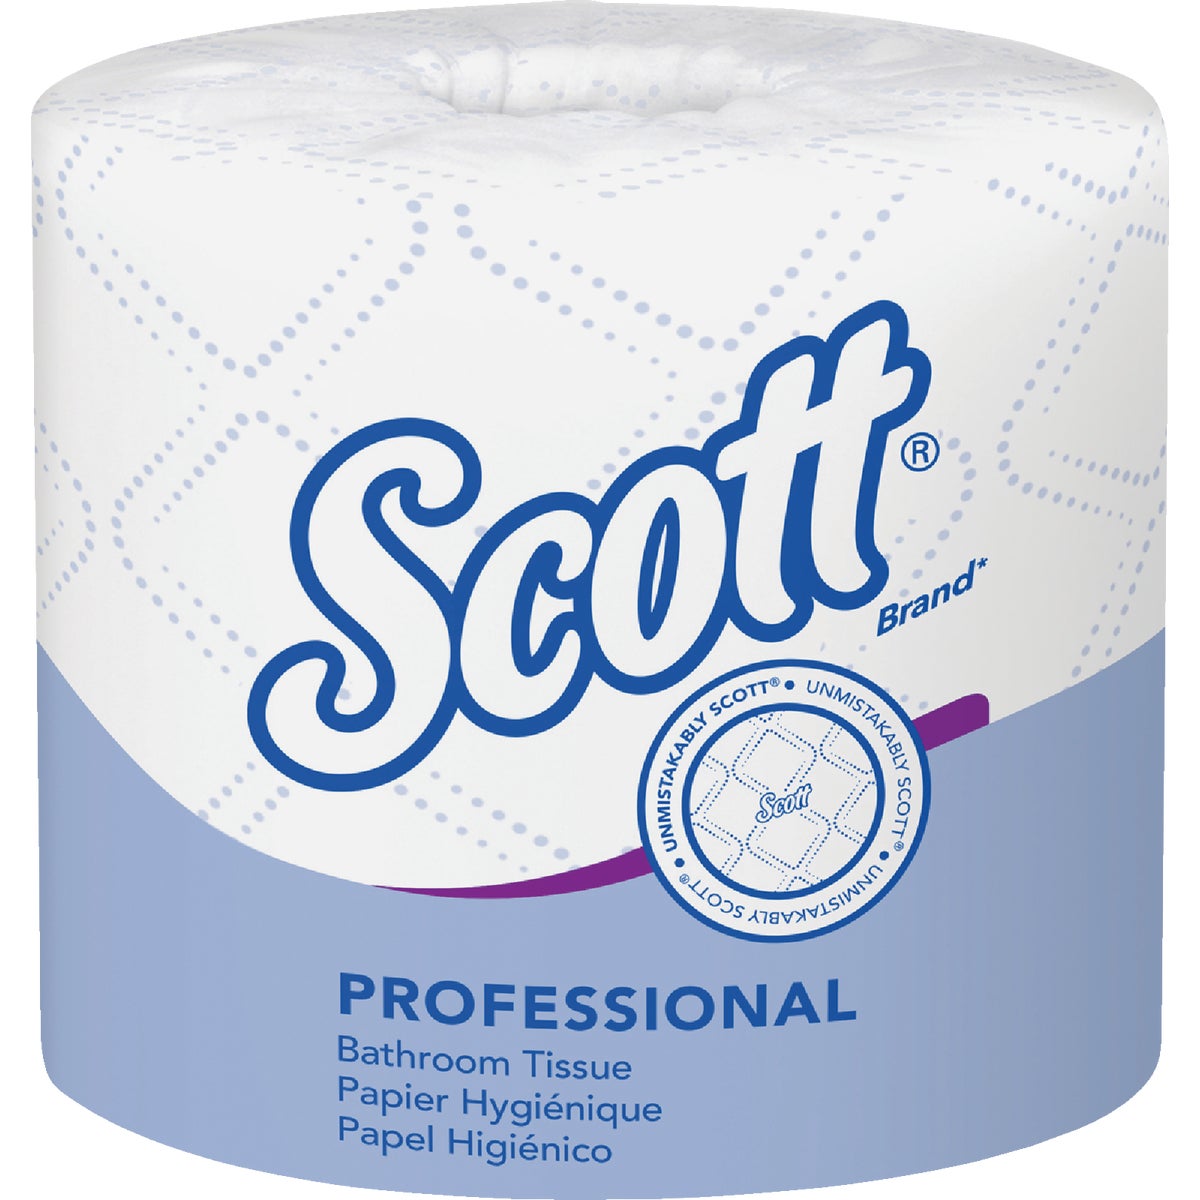 Item 629387, Standard roll bath tissue.